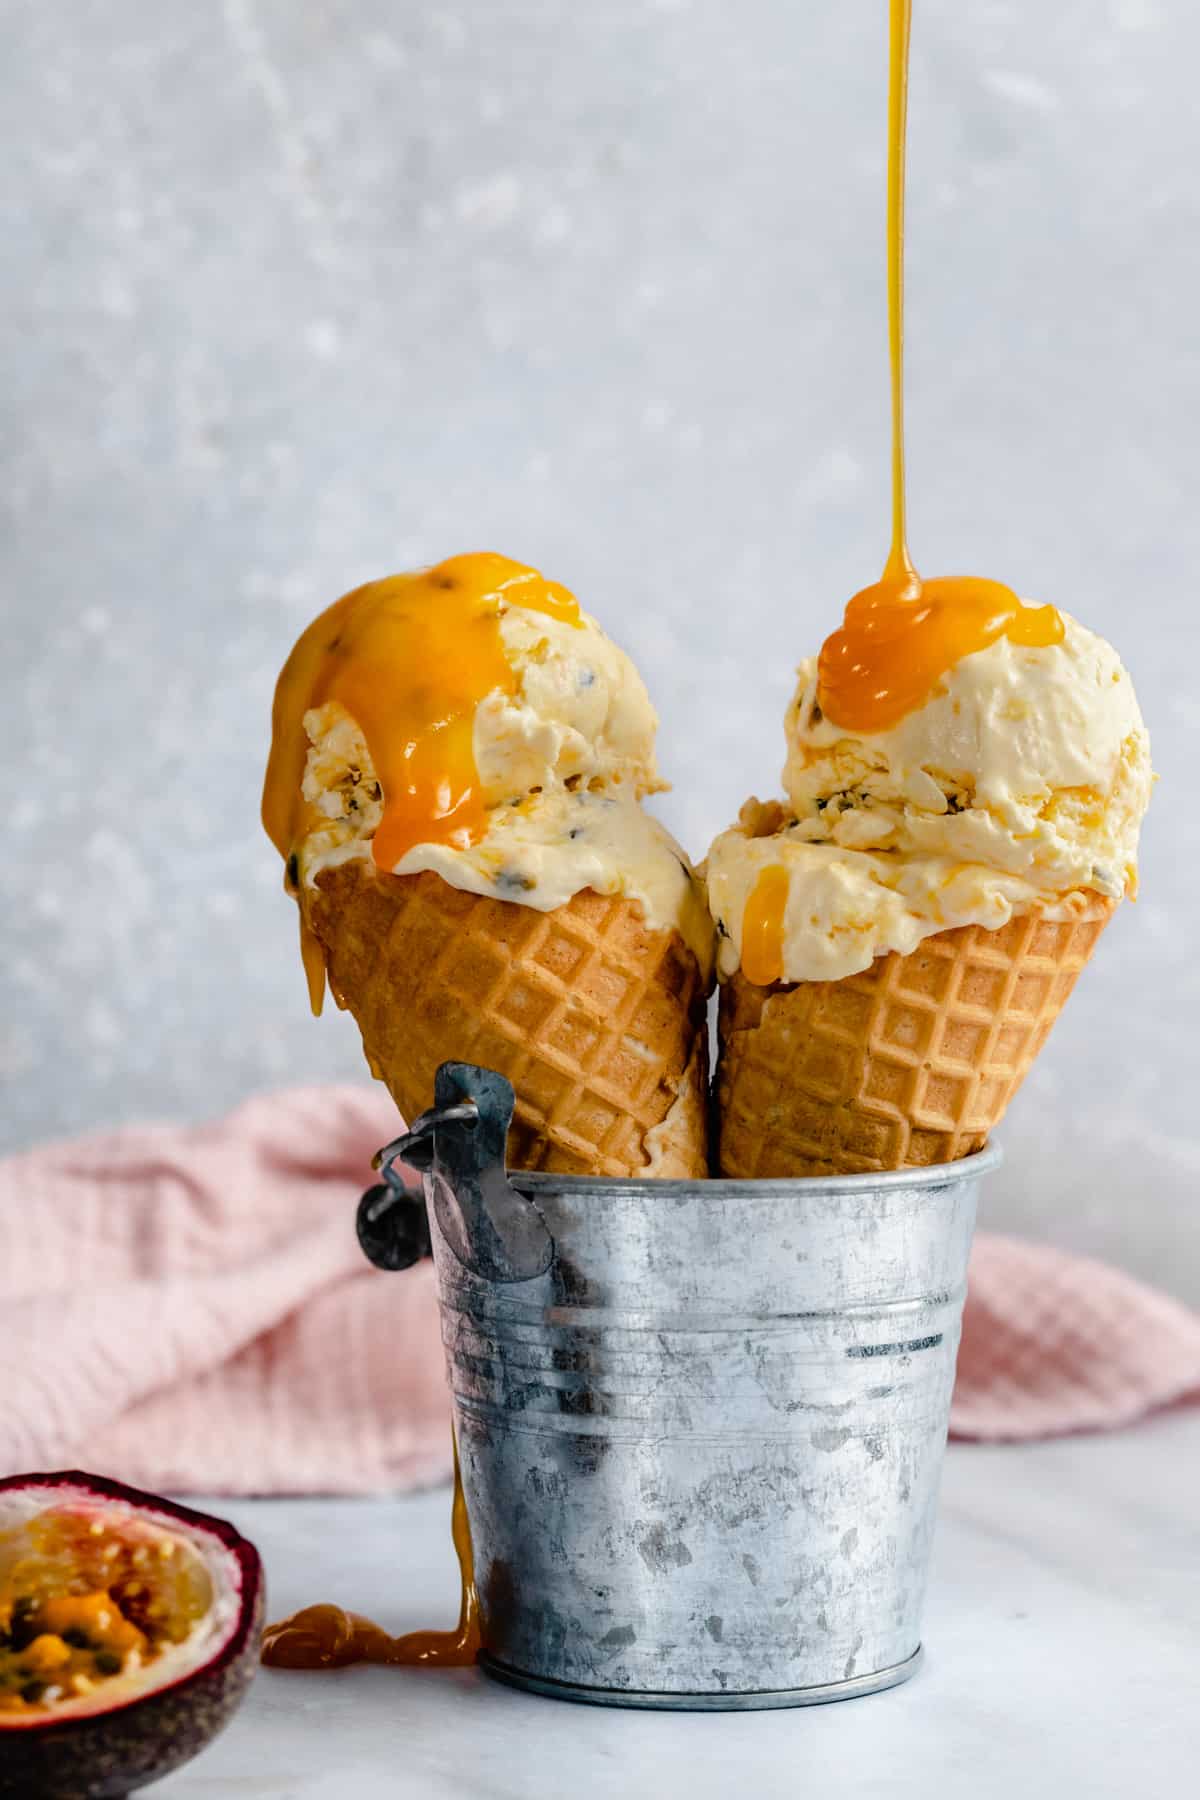 Passion fruit ice cream cones in a silver metal bucket.